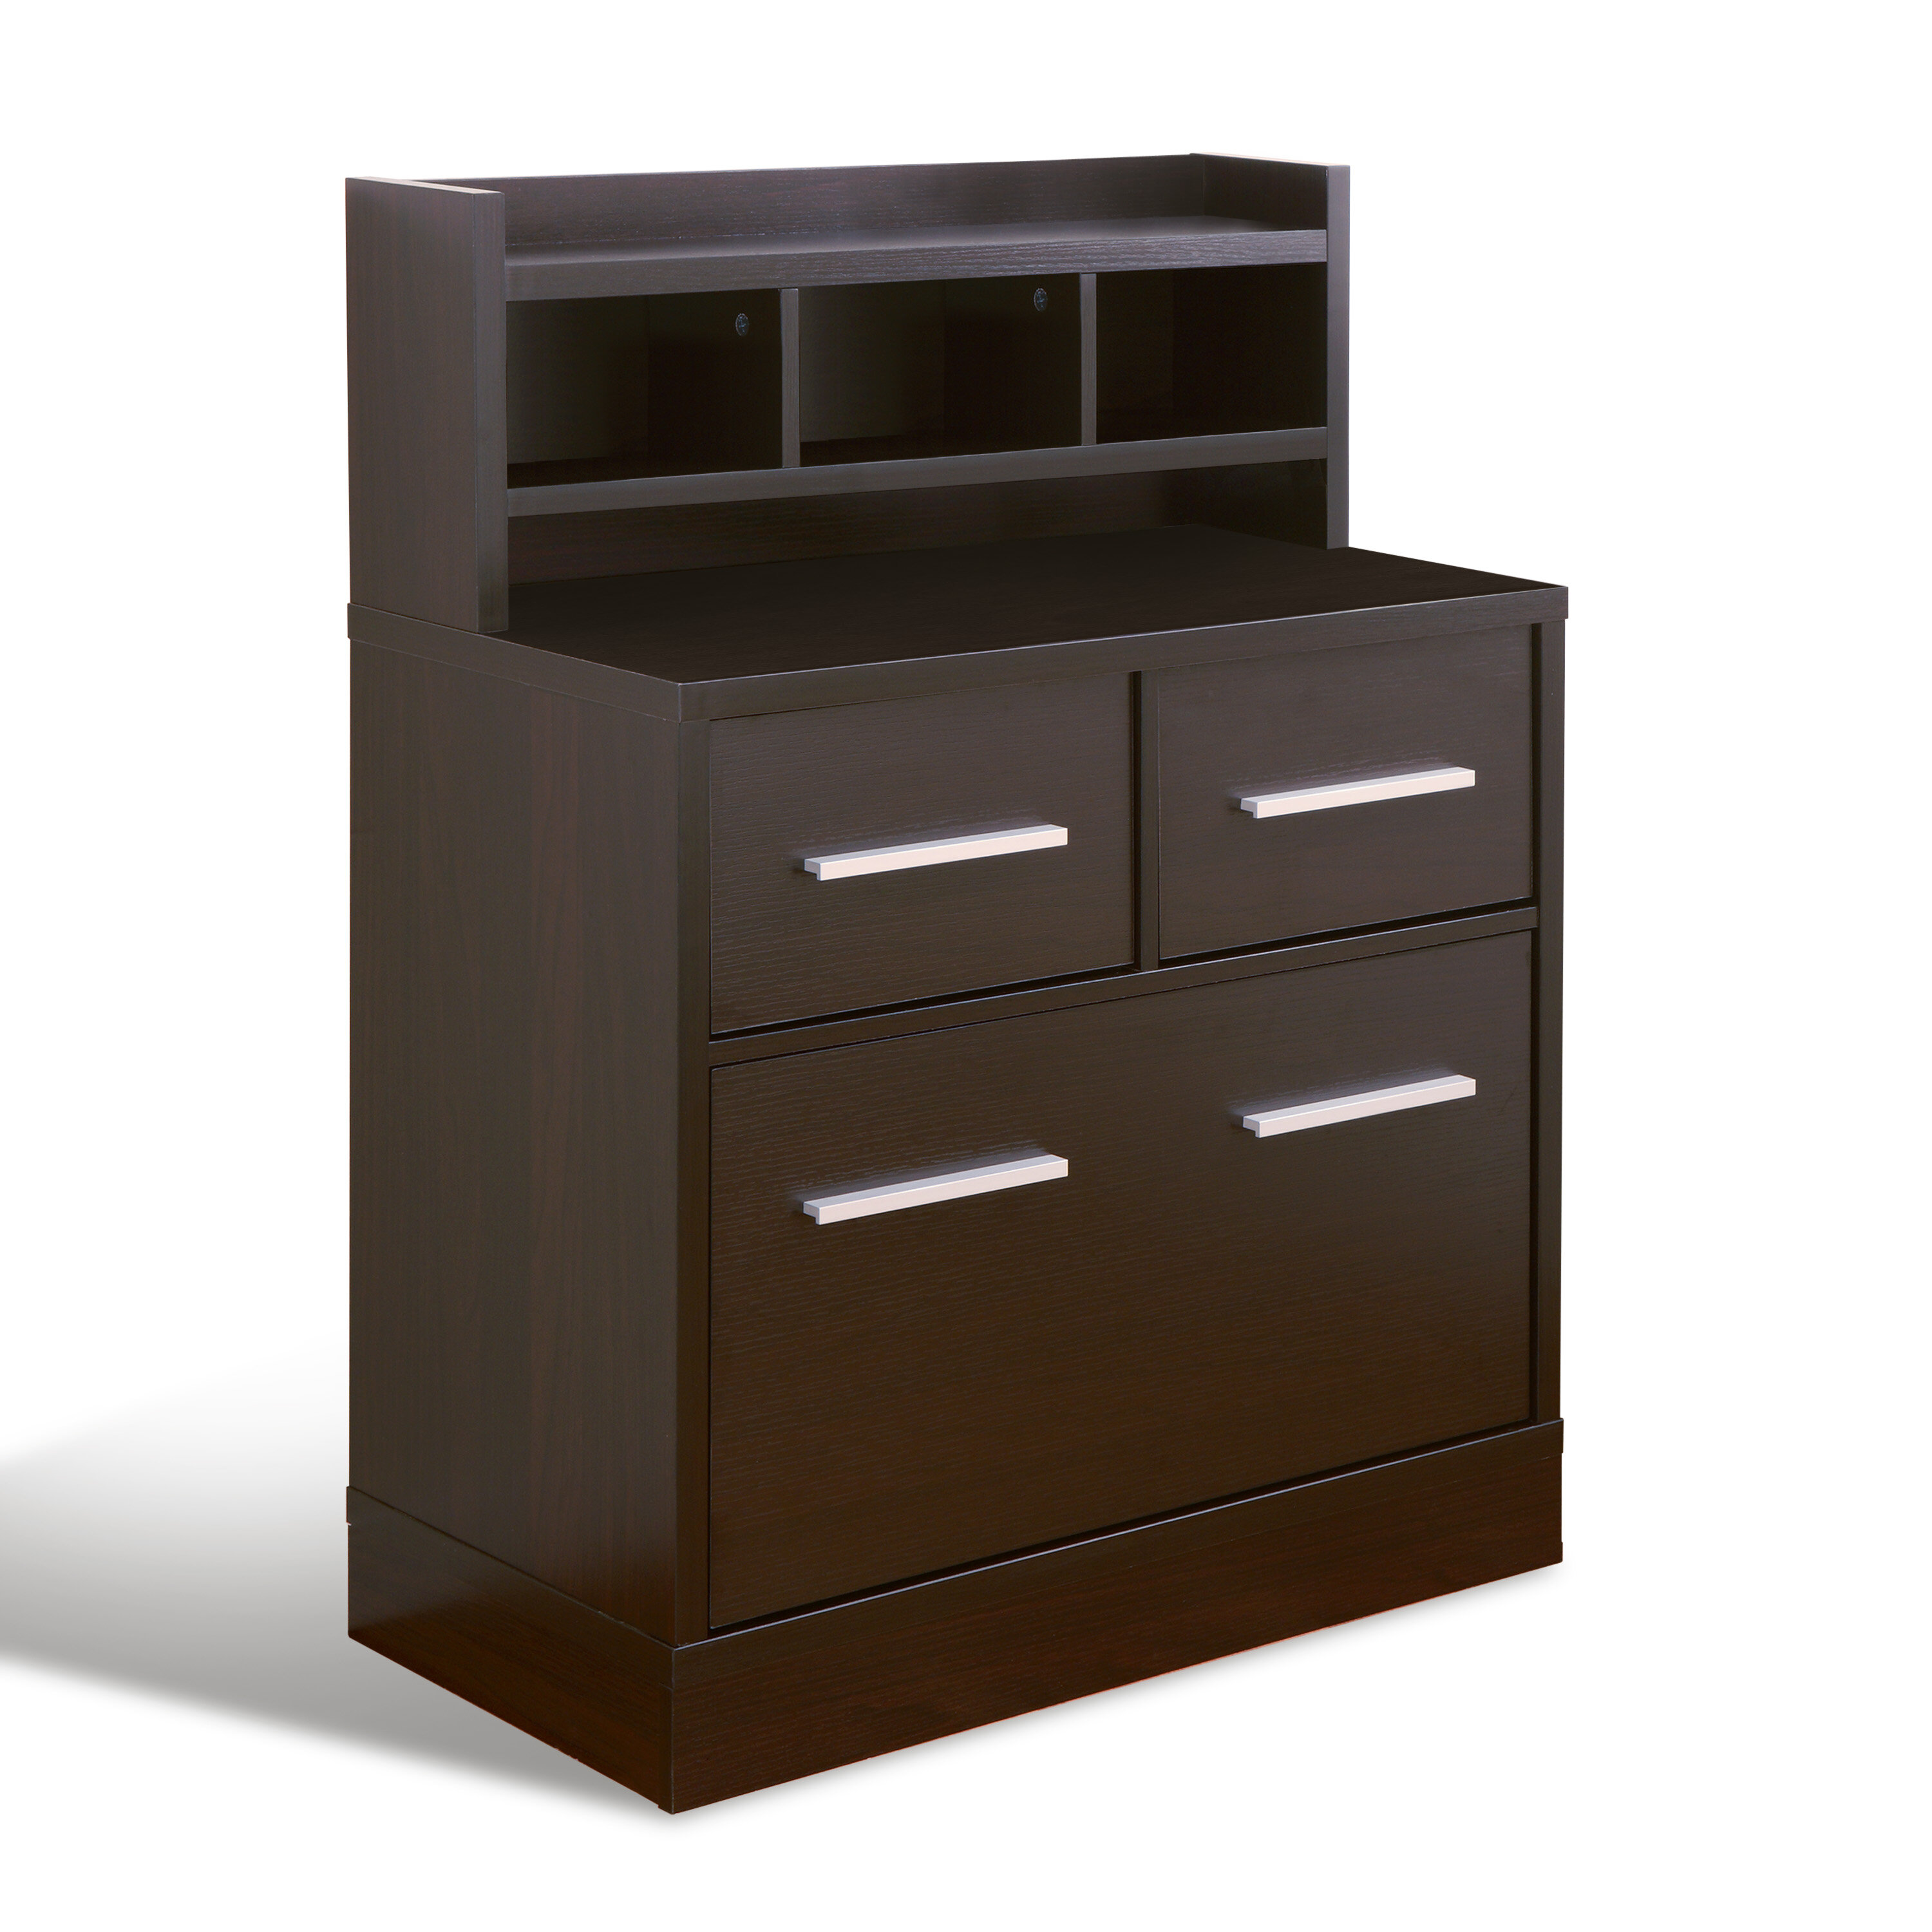 3 Drawer Vertical Filing Cabinet Reviews Allmodern